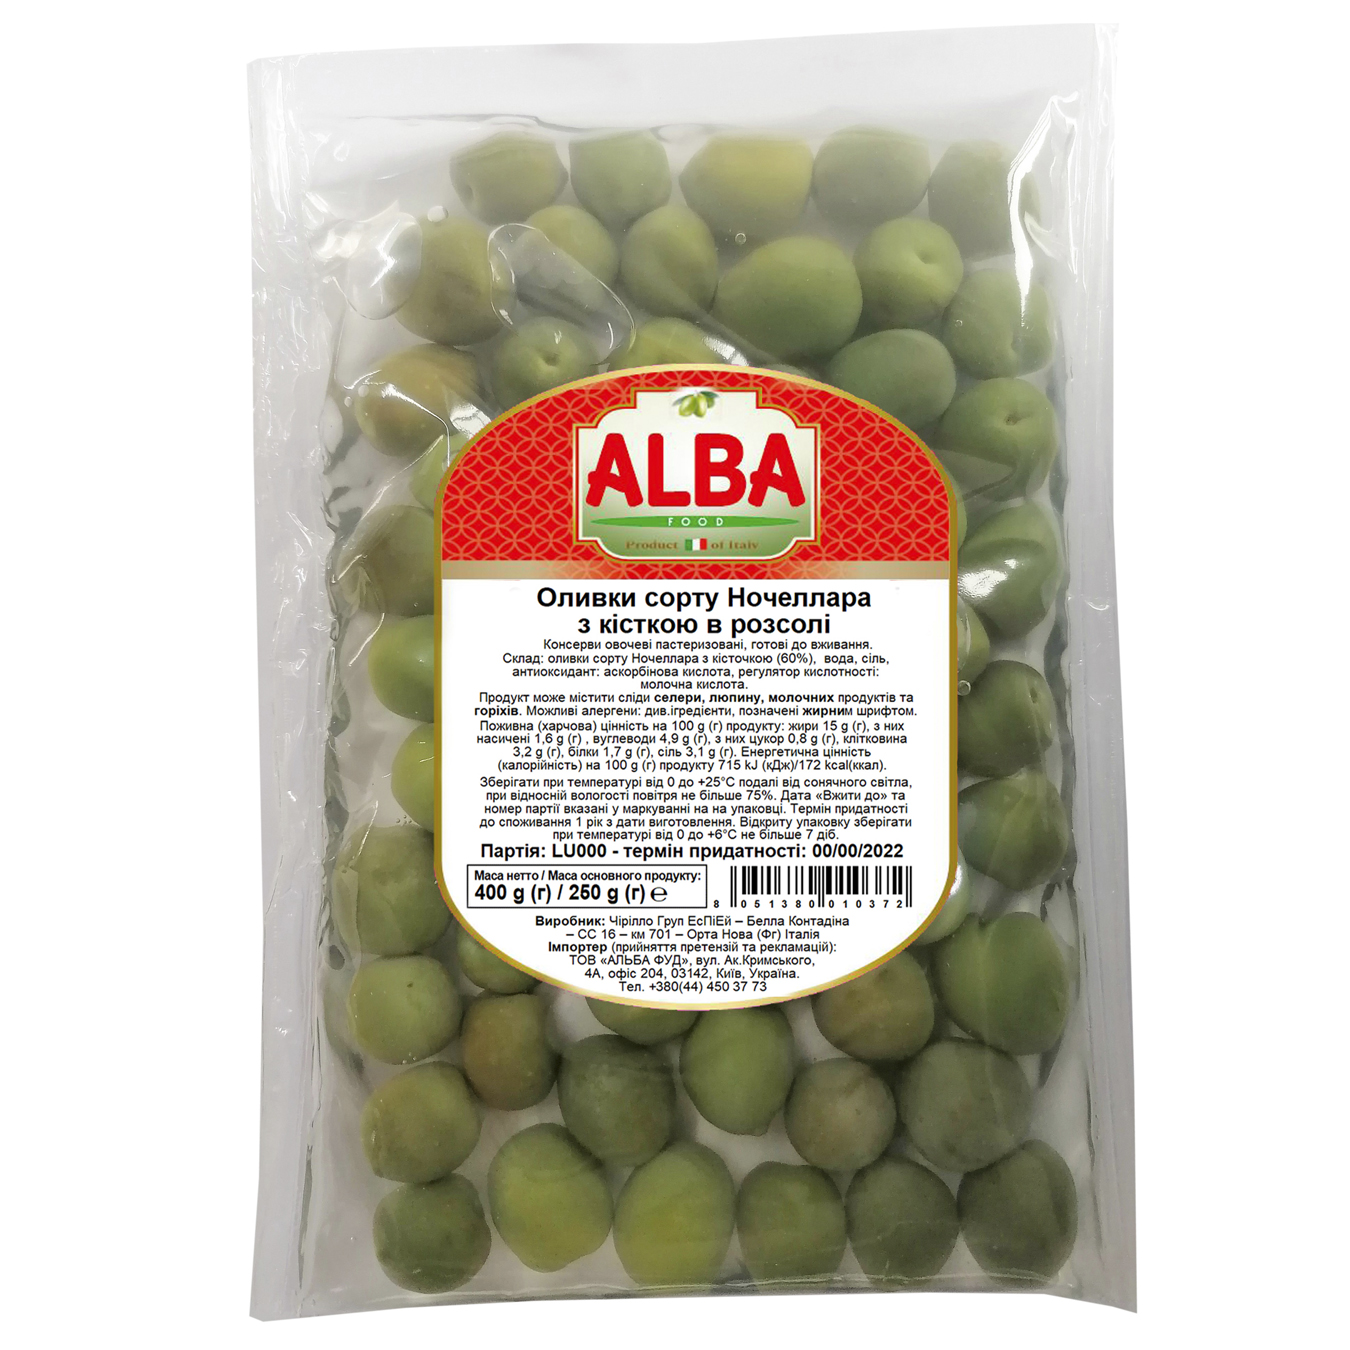 Alba Food Nocellar green pitted olives in brine 400g